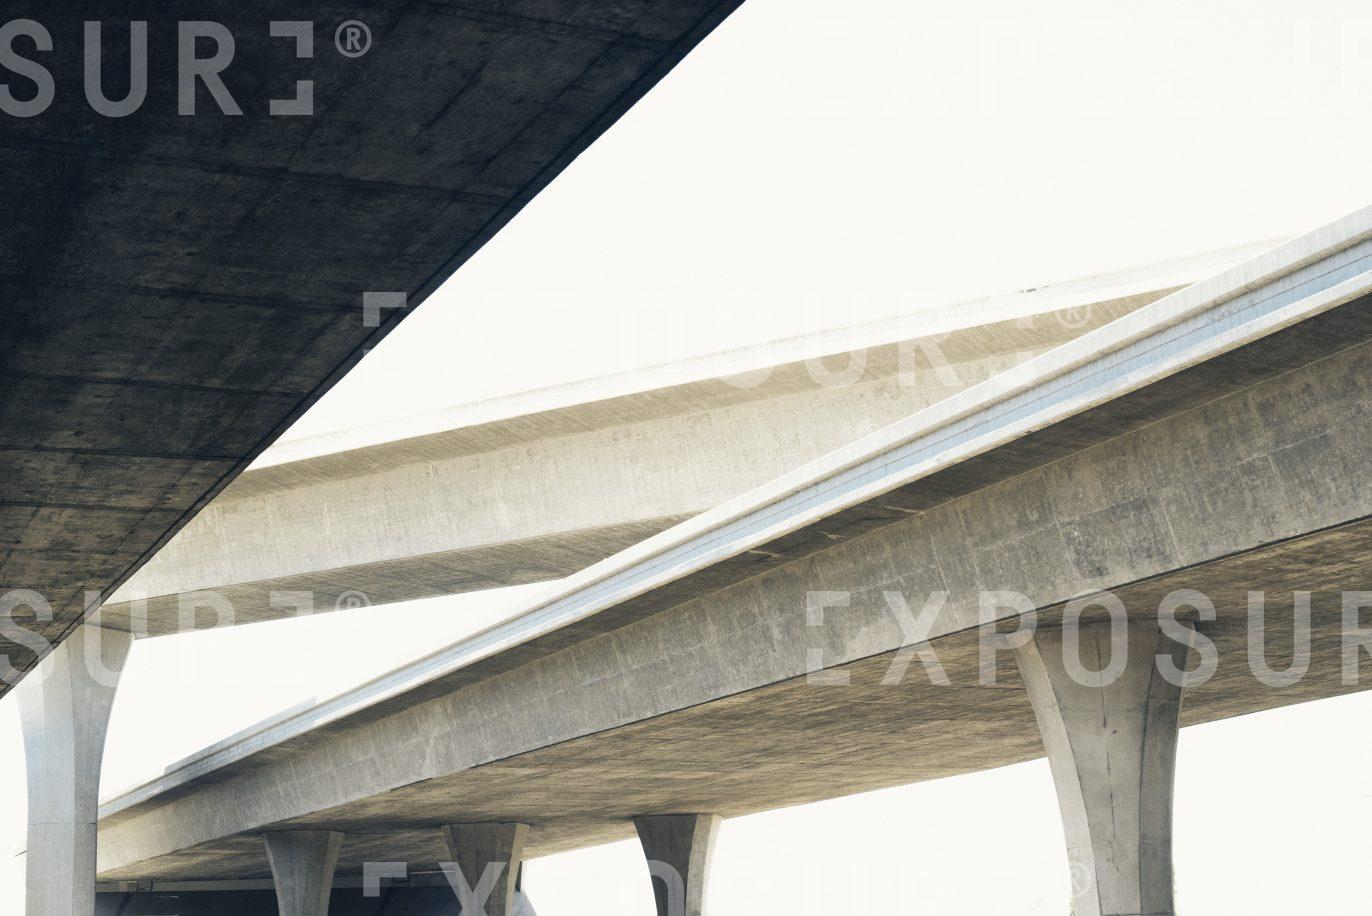 Concrete highway